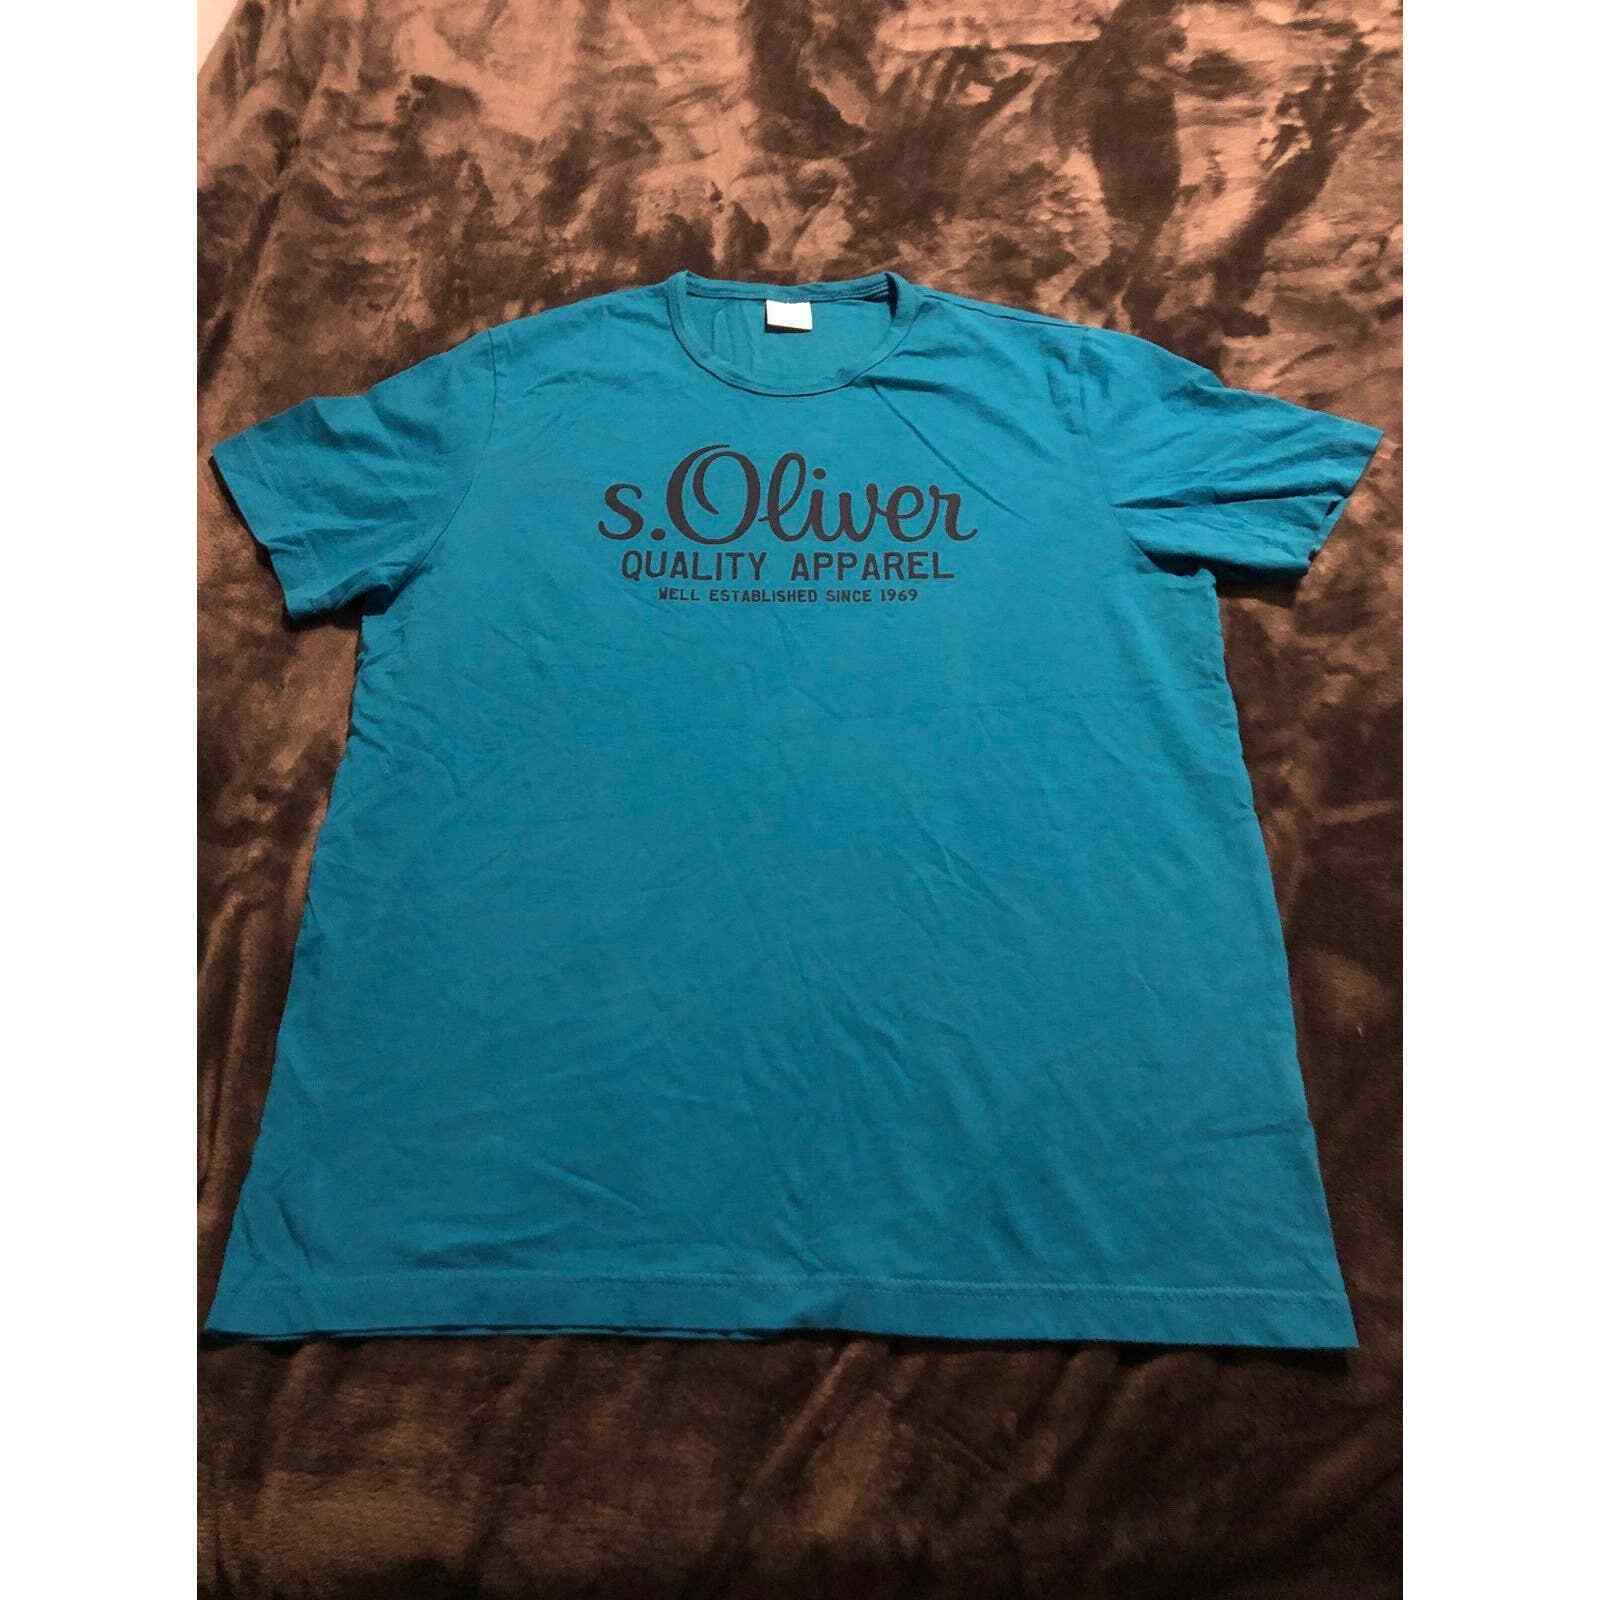 S shirt | eBay